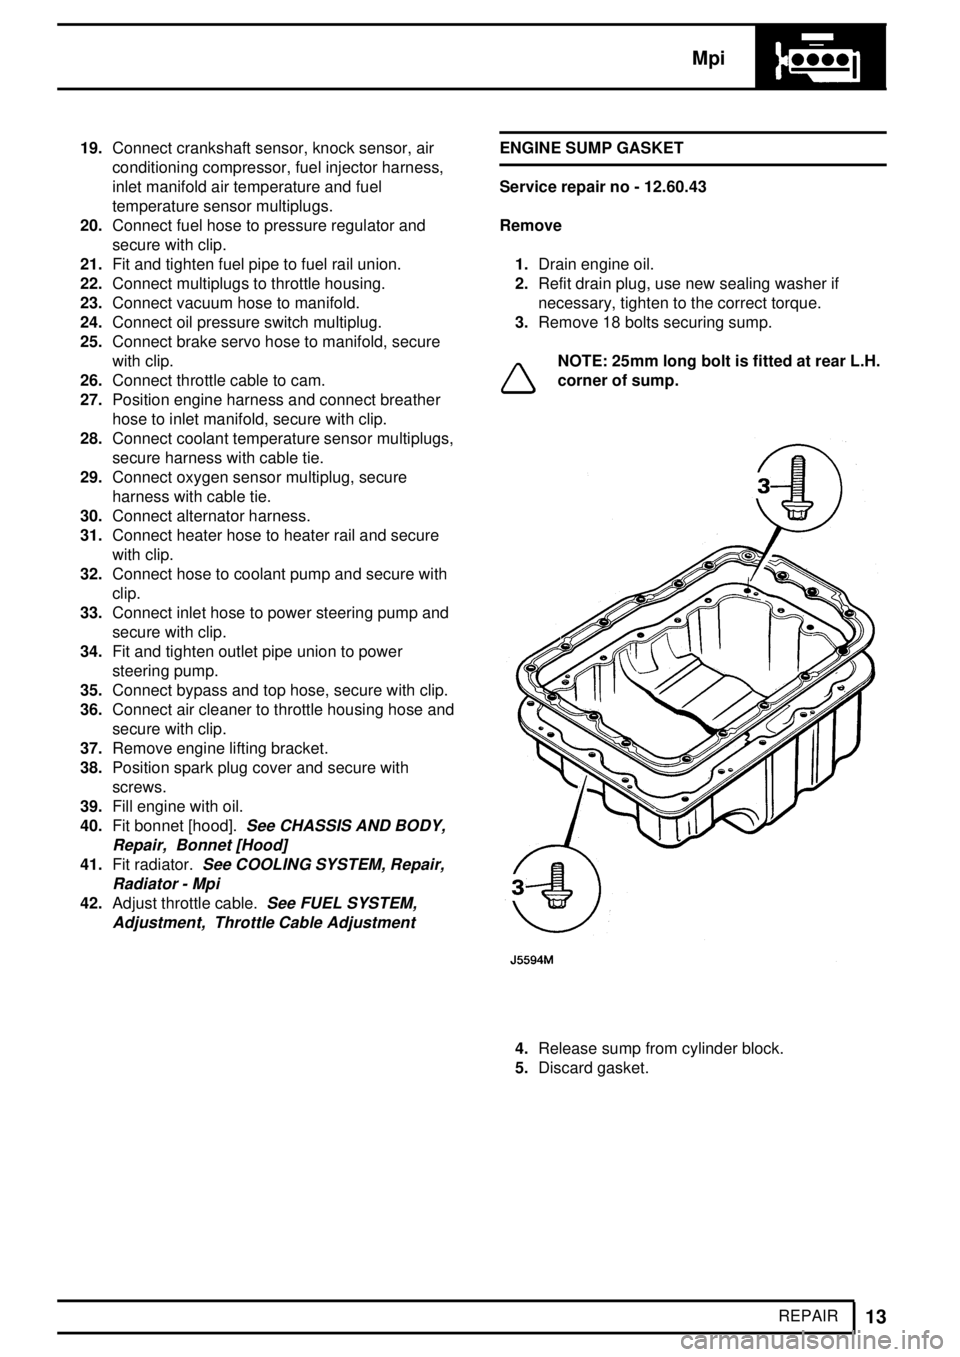 LAND ROVER DISCOVERY 1995  Service User Guide Mpi
13
REPAIR 19.Connect crankshaft sensor, knock sensor, air
conditioning compressor, fuel injector harness,
inlet manifold air temperature and fuel
temperature sensor multiplugs.
20.Connect fuel hos